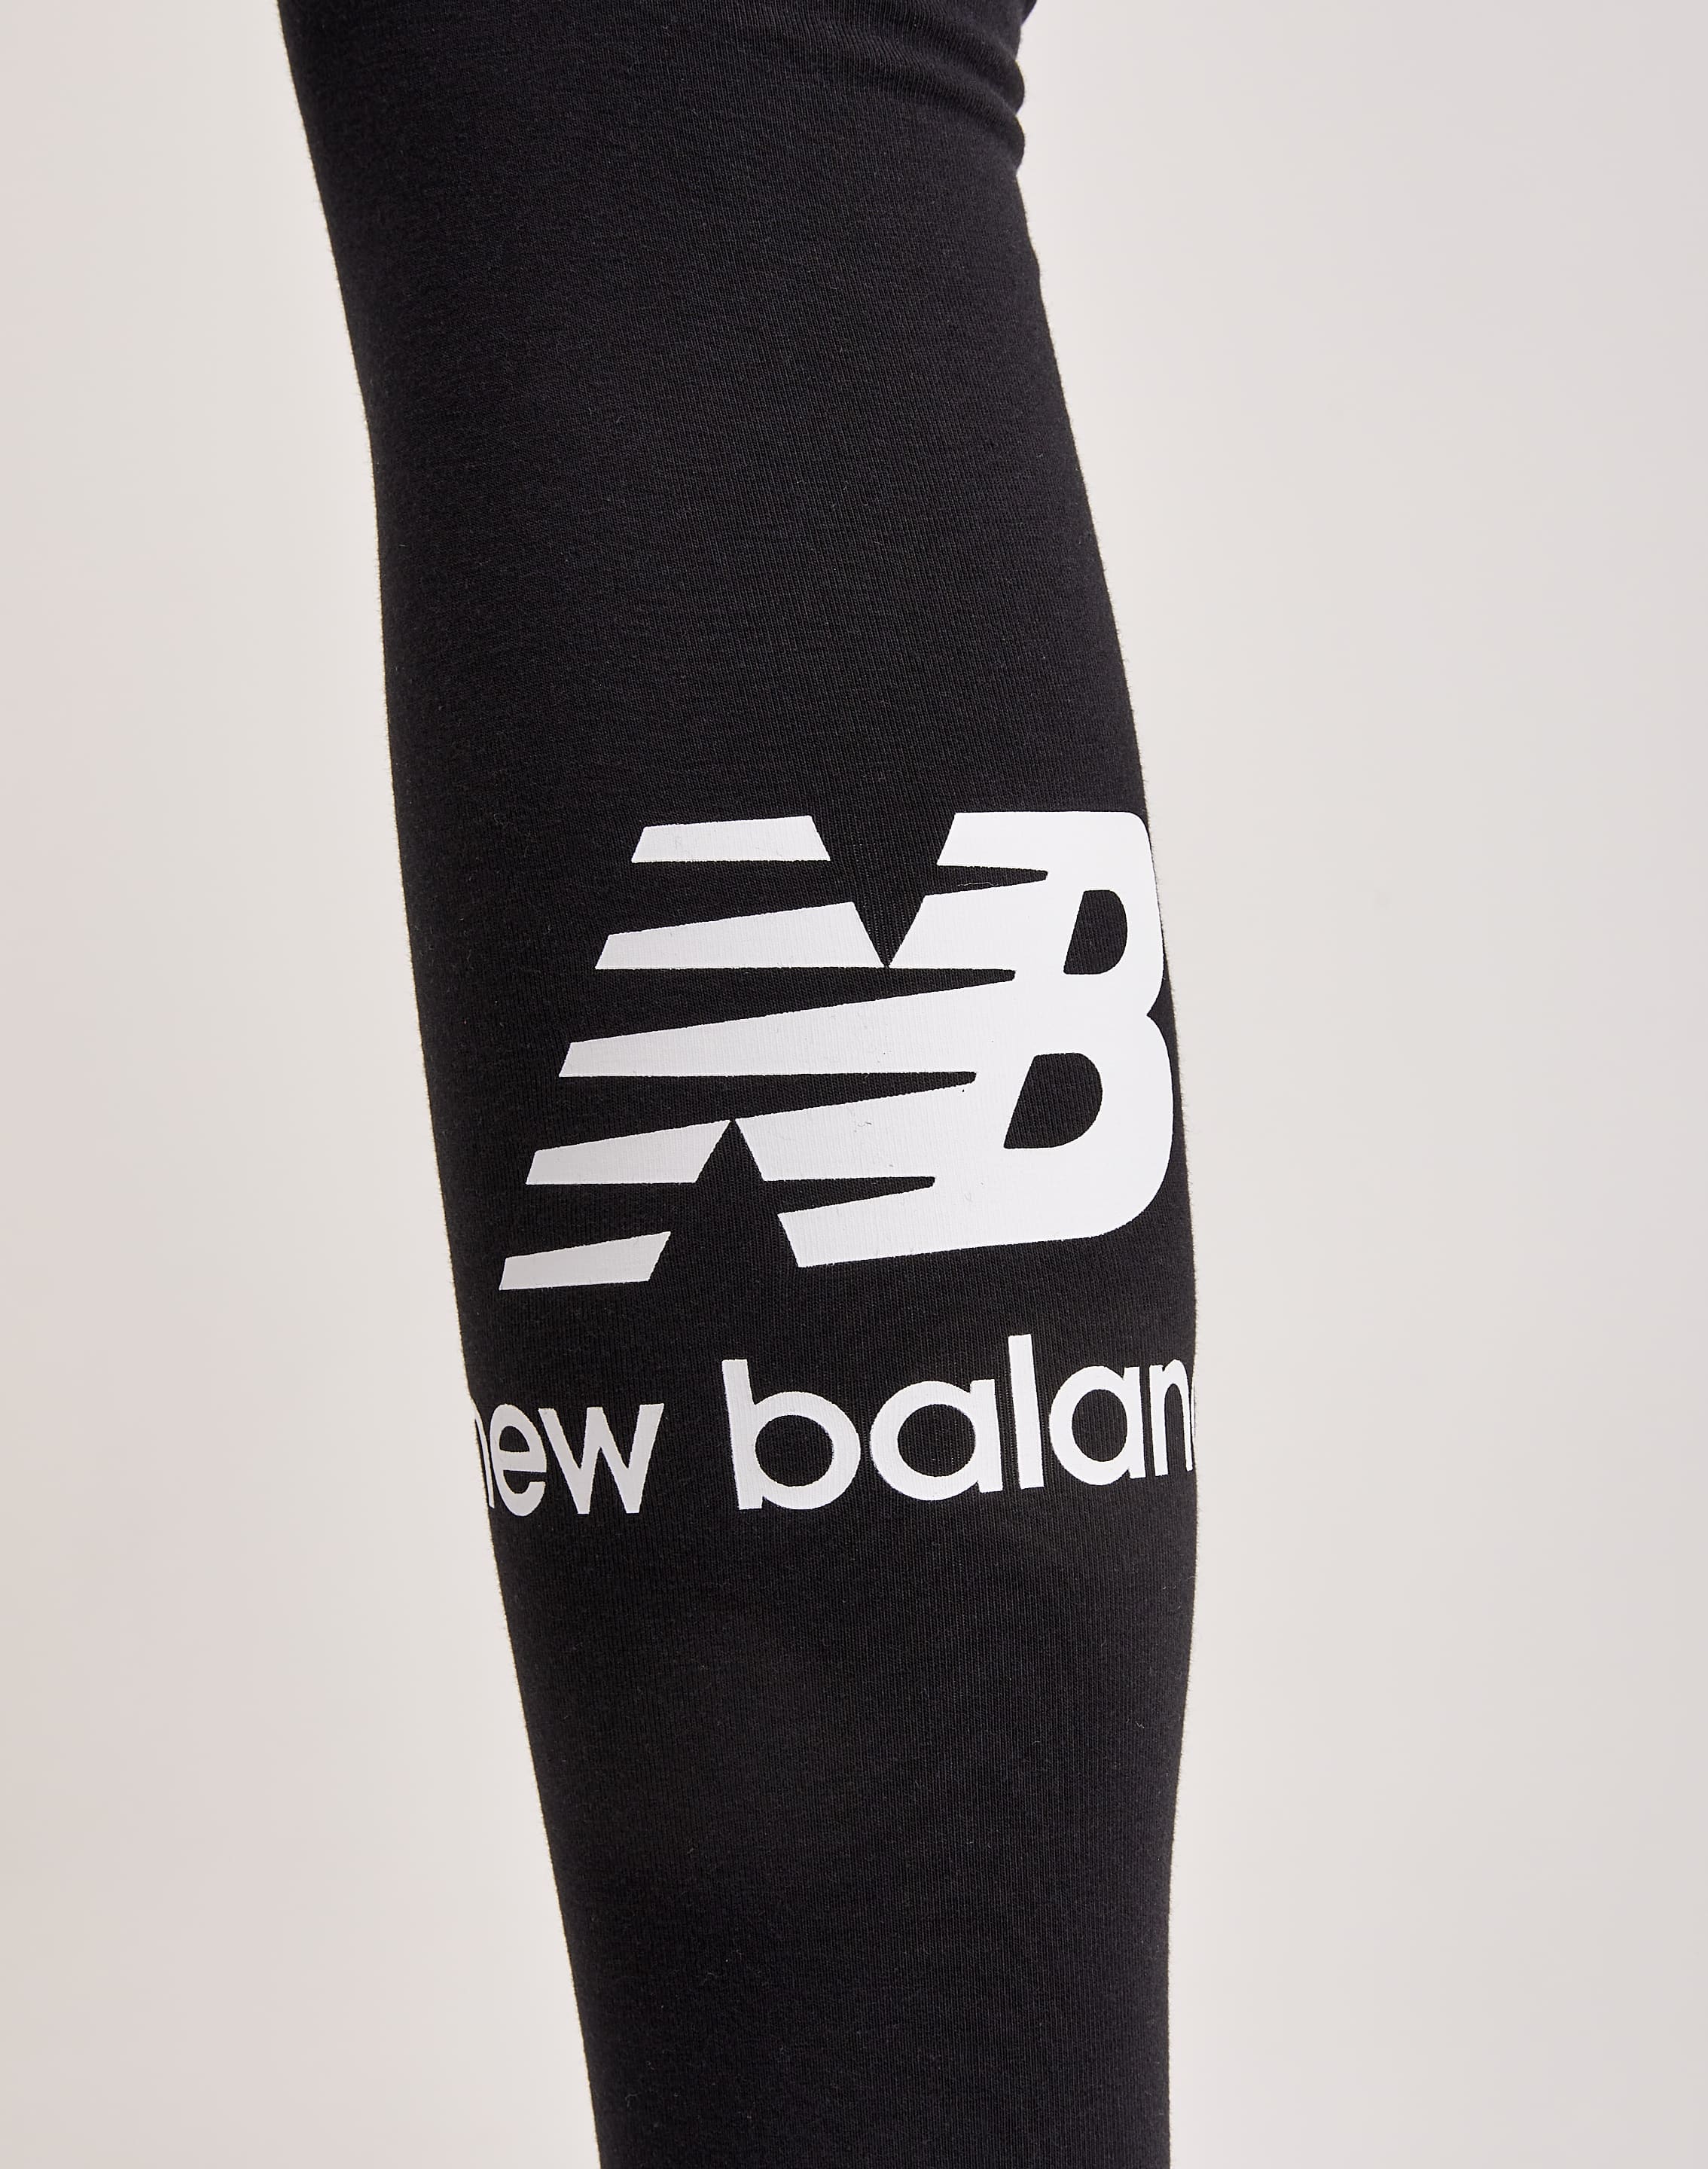 New Balance : Athletics Terrain Tight Legging - WLKN